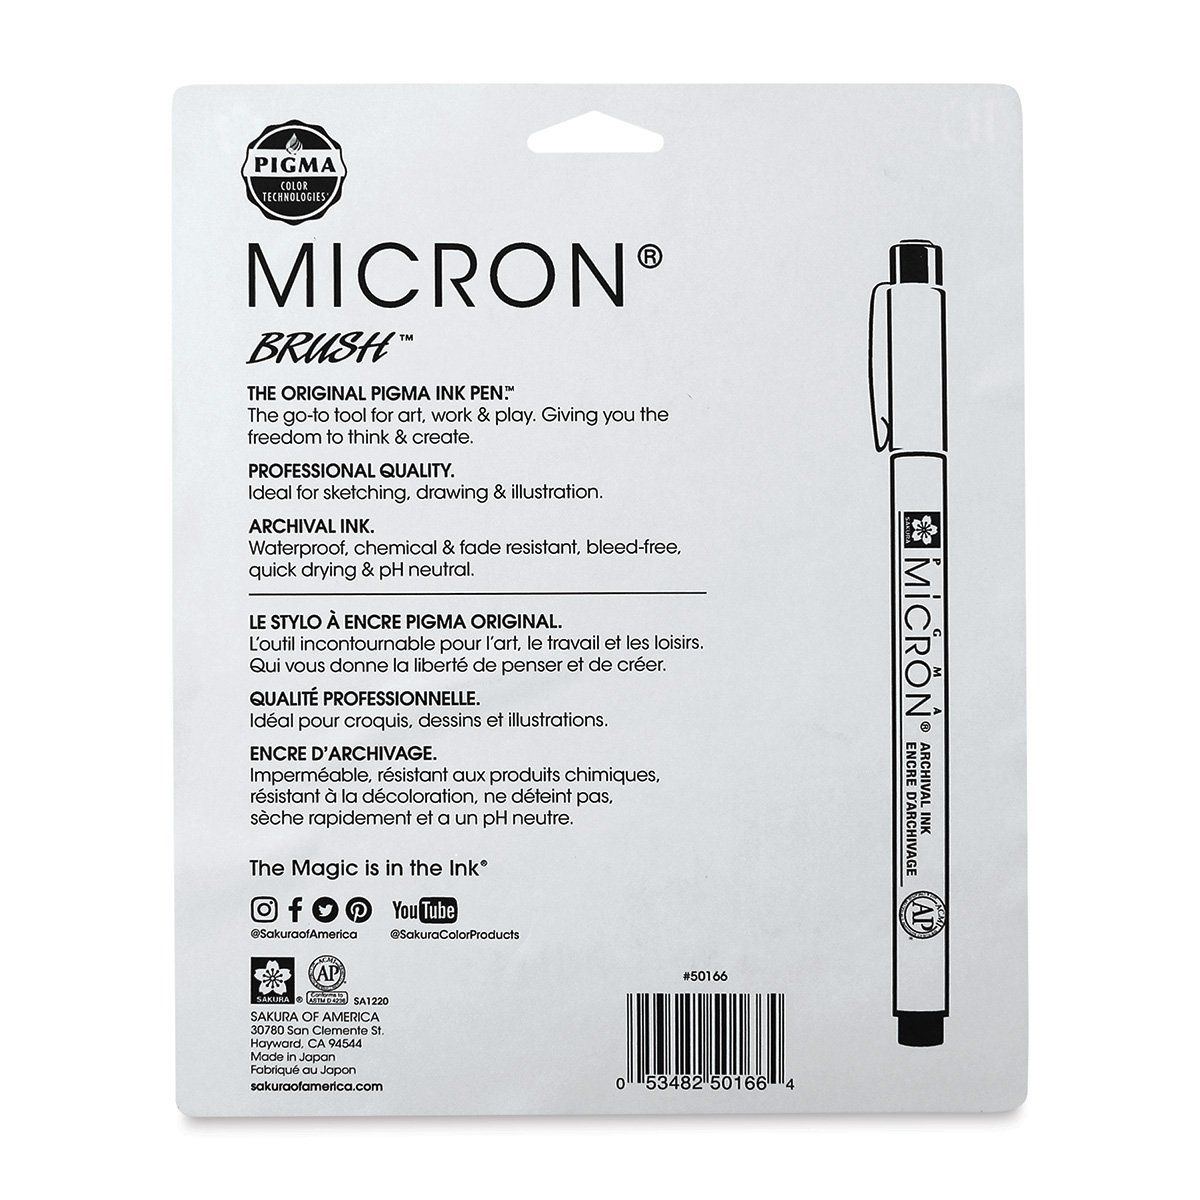 Sakura Pigma Brush Pens - Grays and Black, Brush and Micron, Set